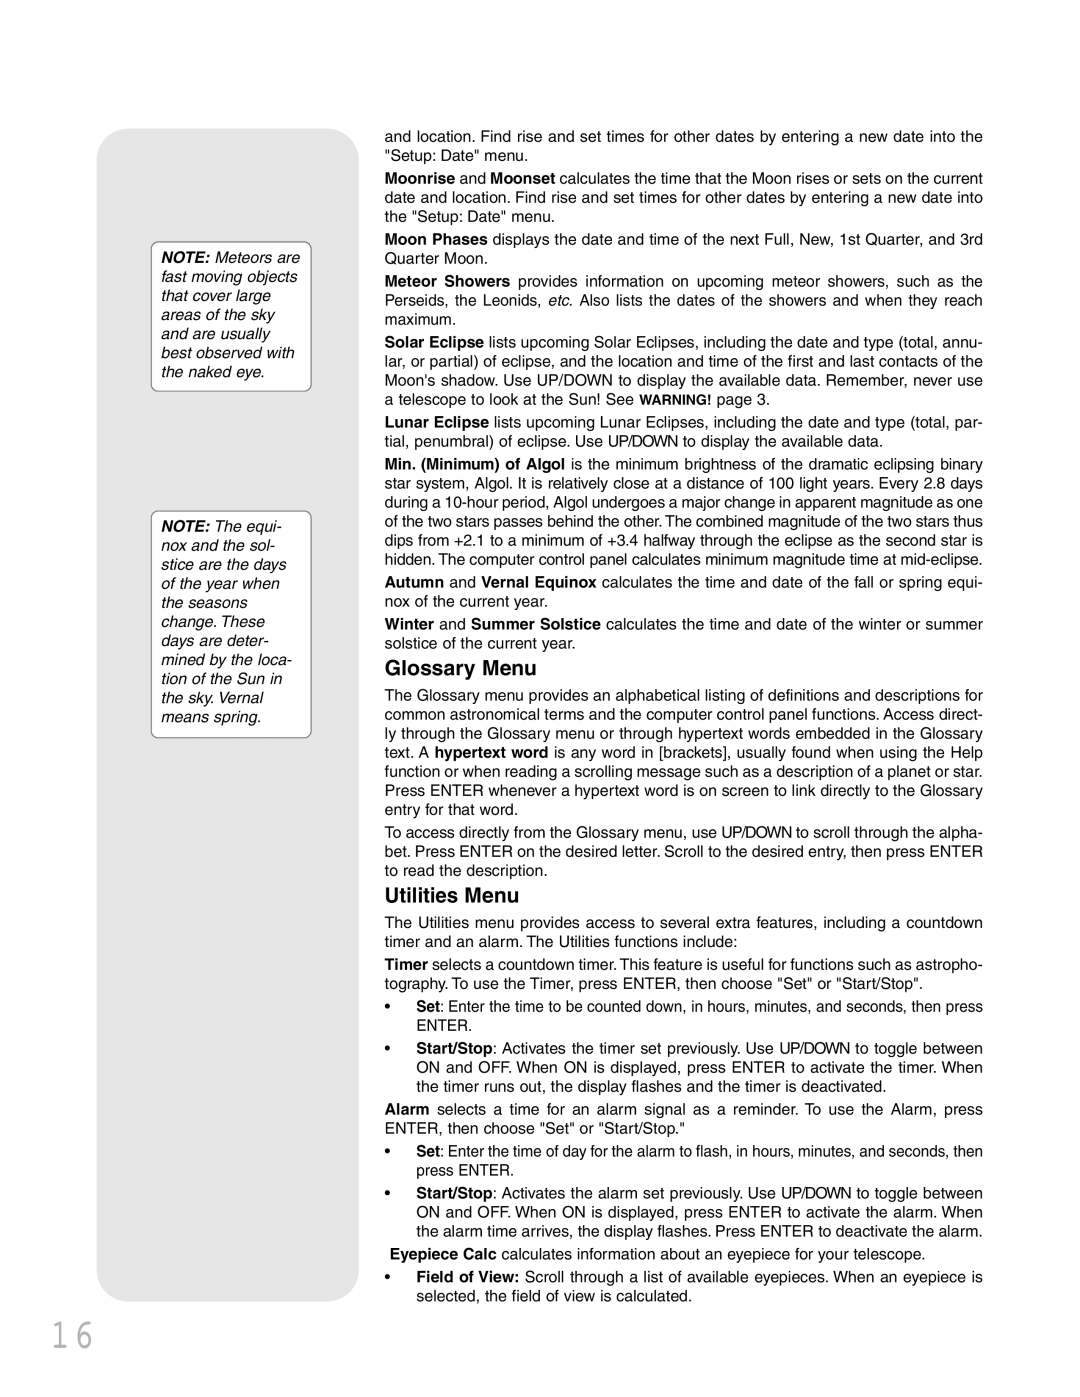 Meade NGC instruction manual Glossary Menu, Utilities Menu 